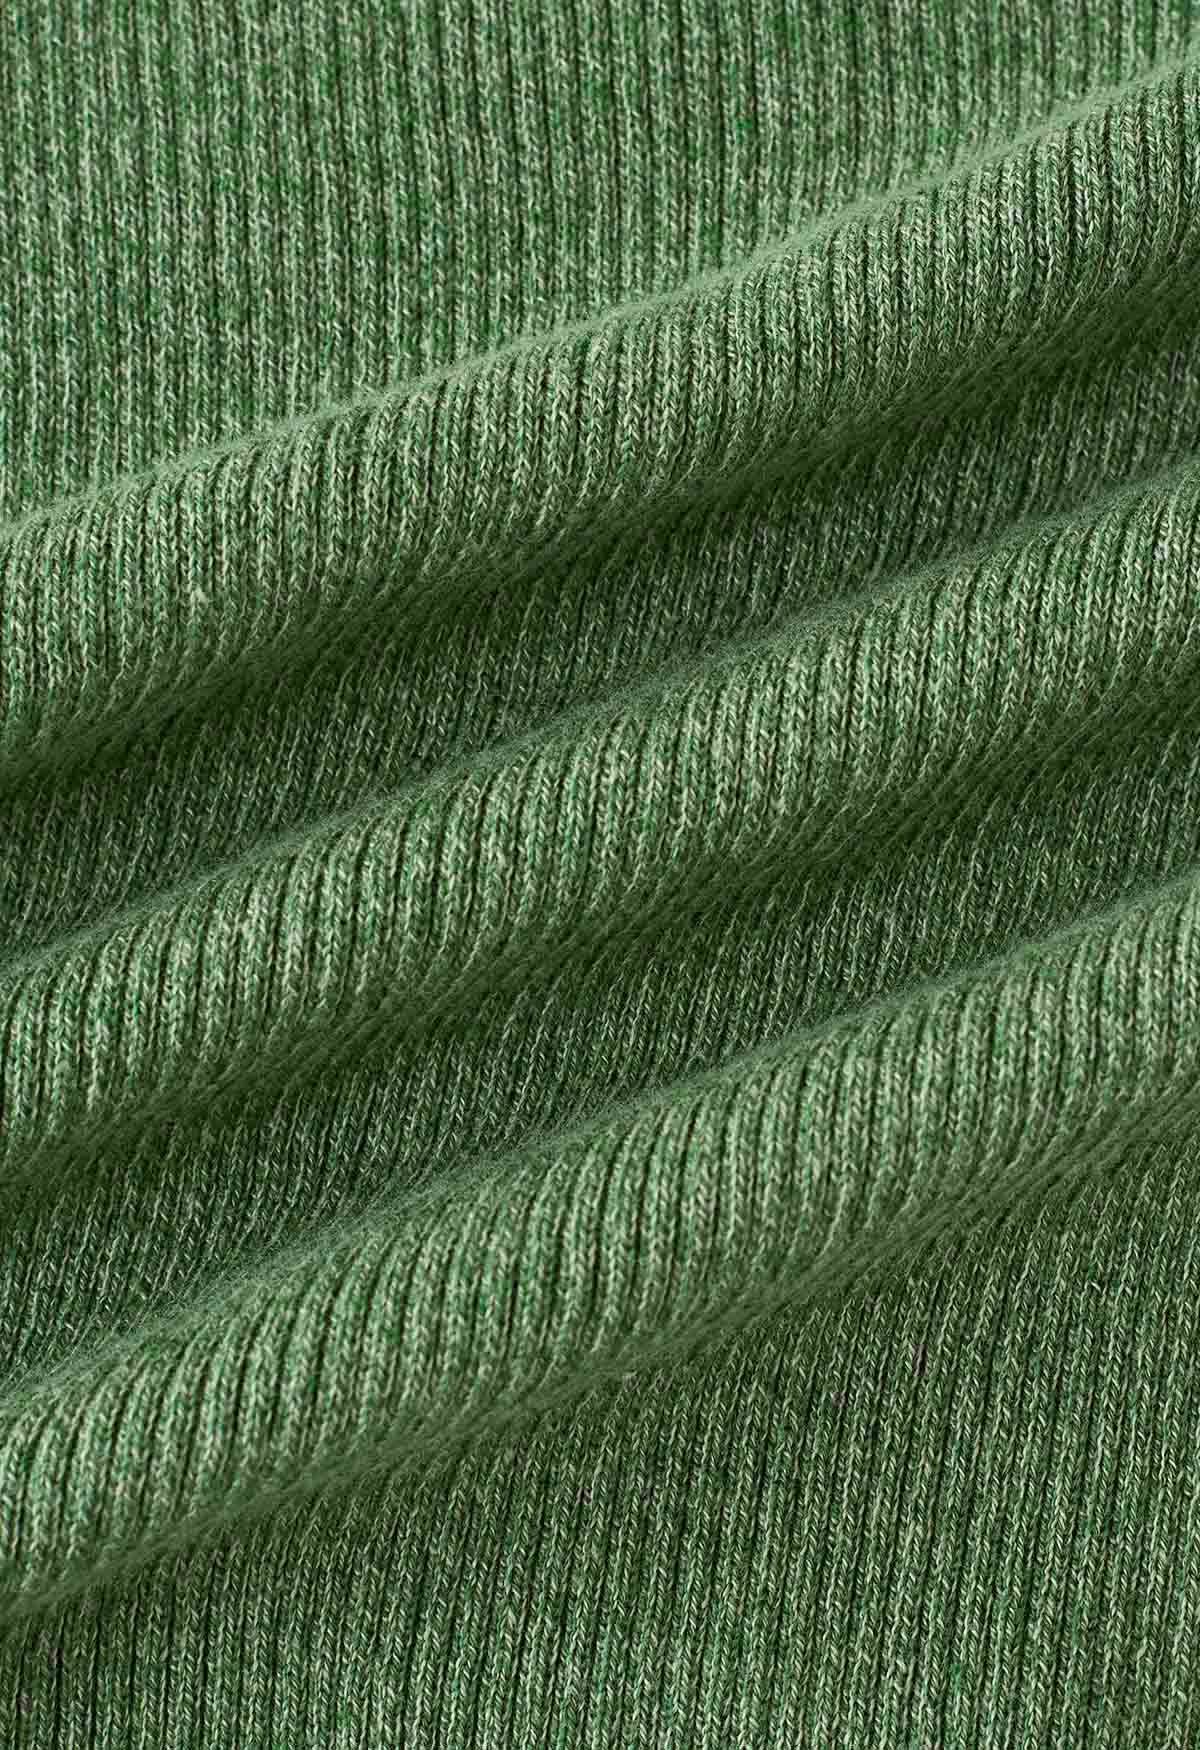 Back Drawstring Sleeveless Knit Top in Green